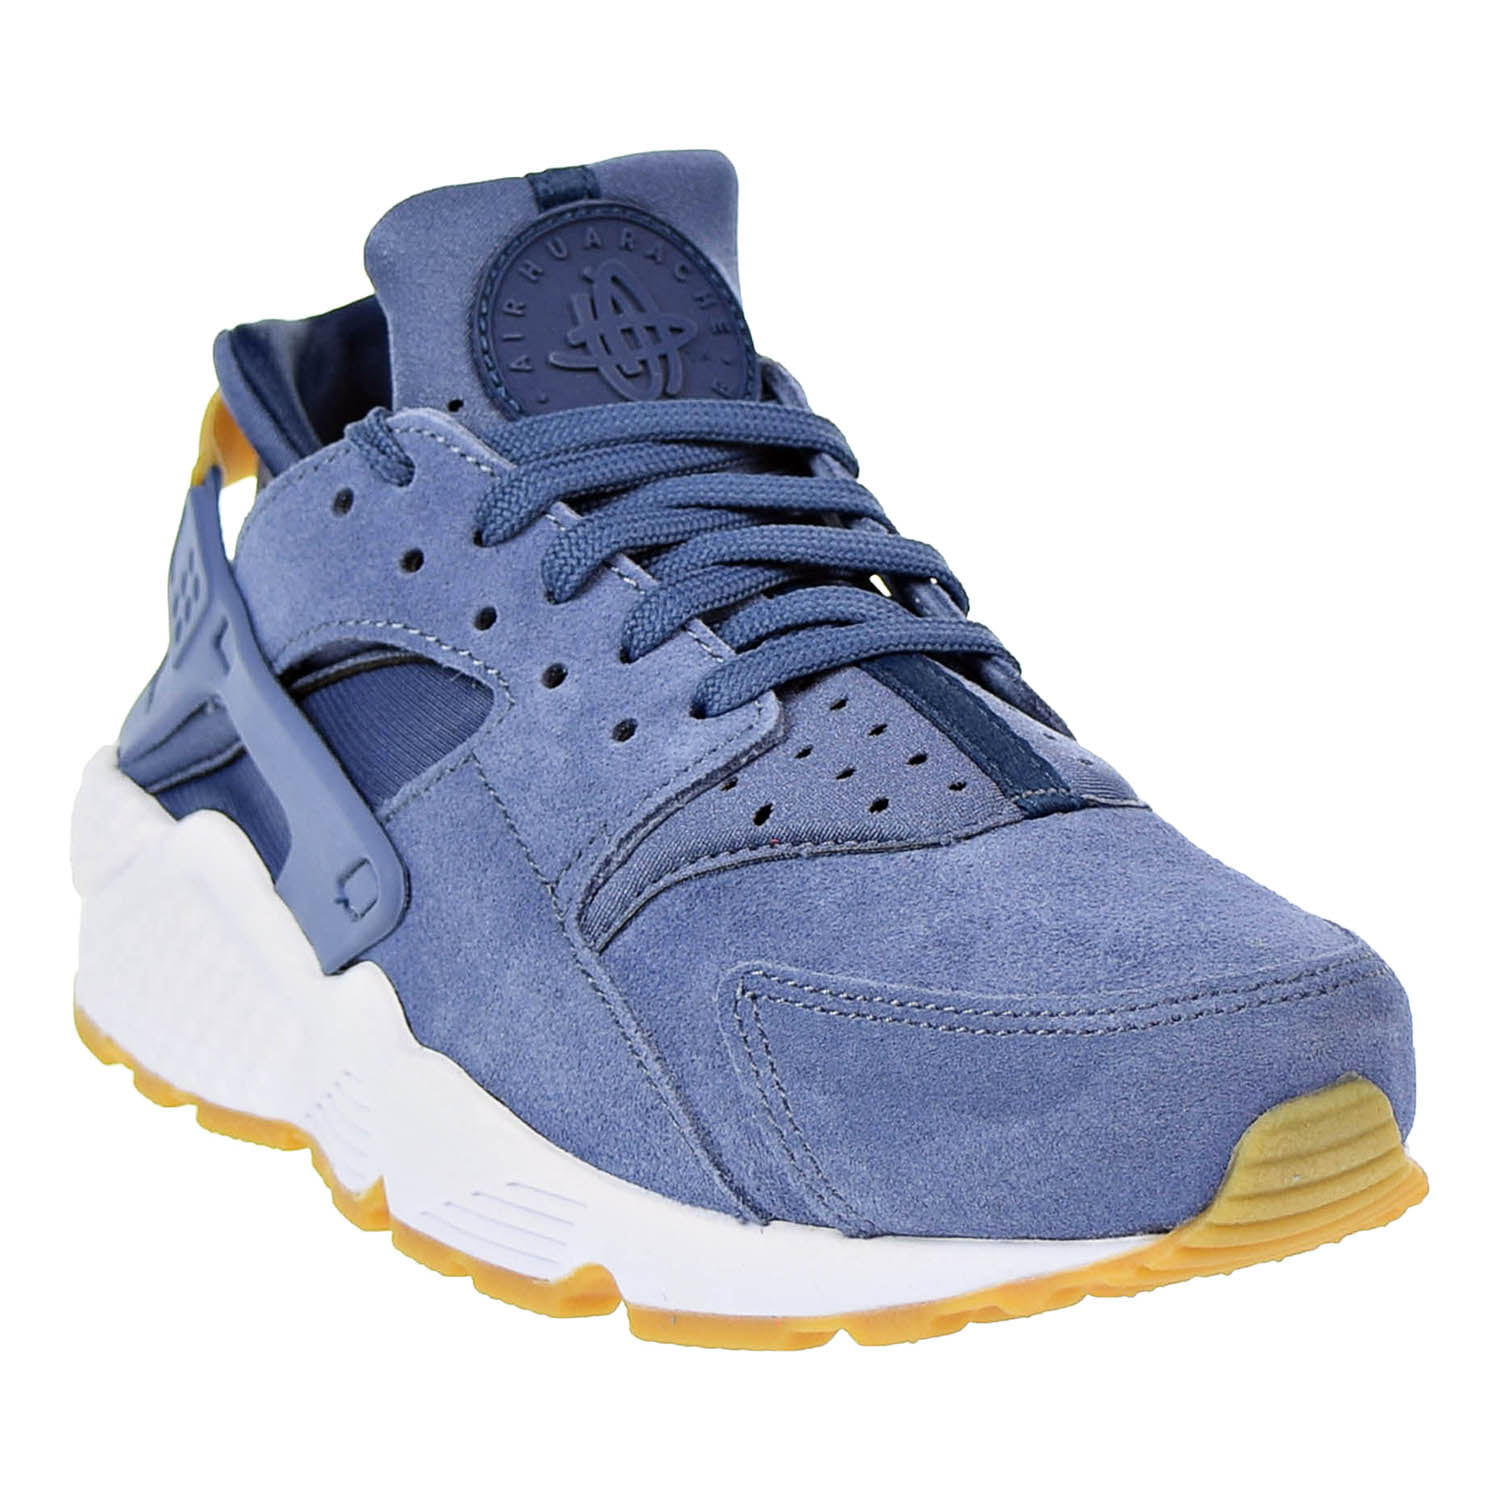 buste triathlon nudler Nike Air Huarache Run Suede Womens Shoes Diffused Blue aa0524-400 (9 B(M)  US) - Walmart.com